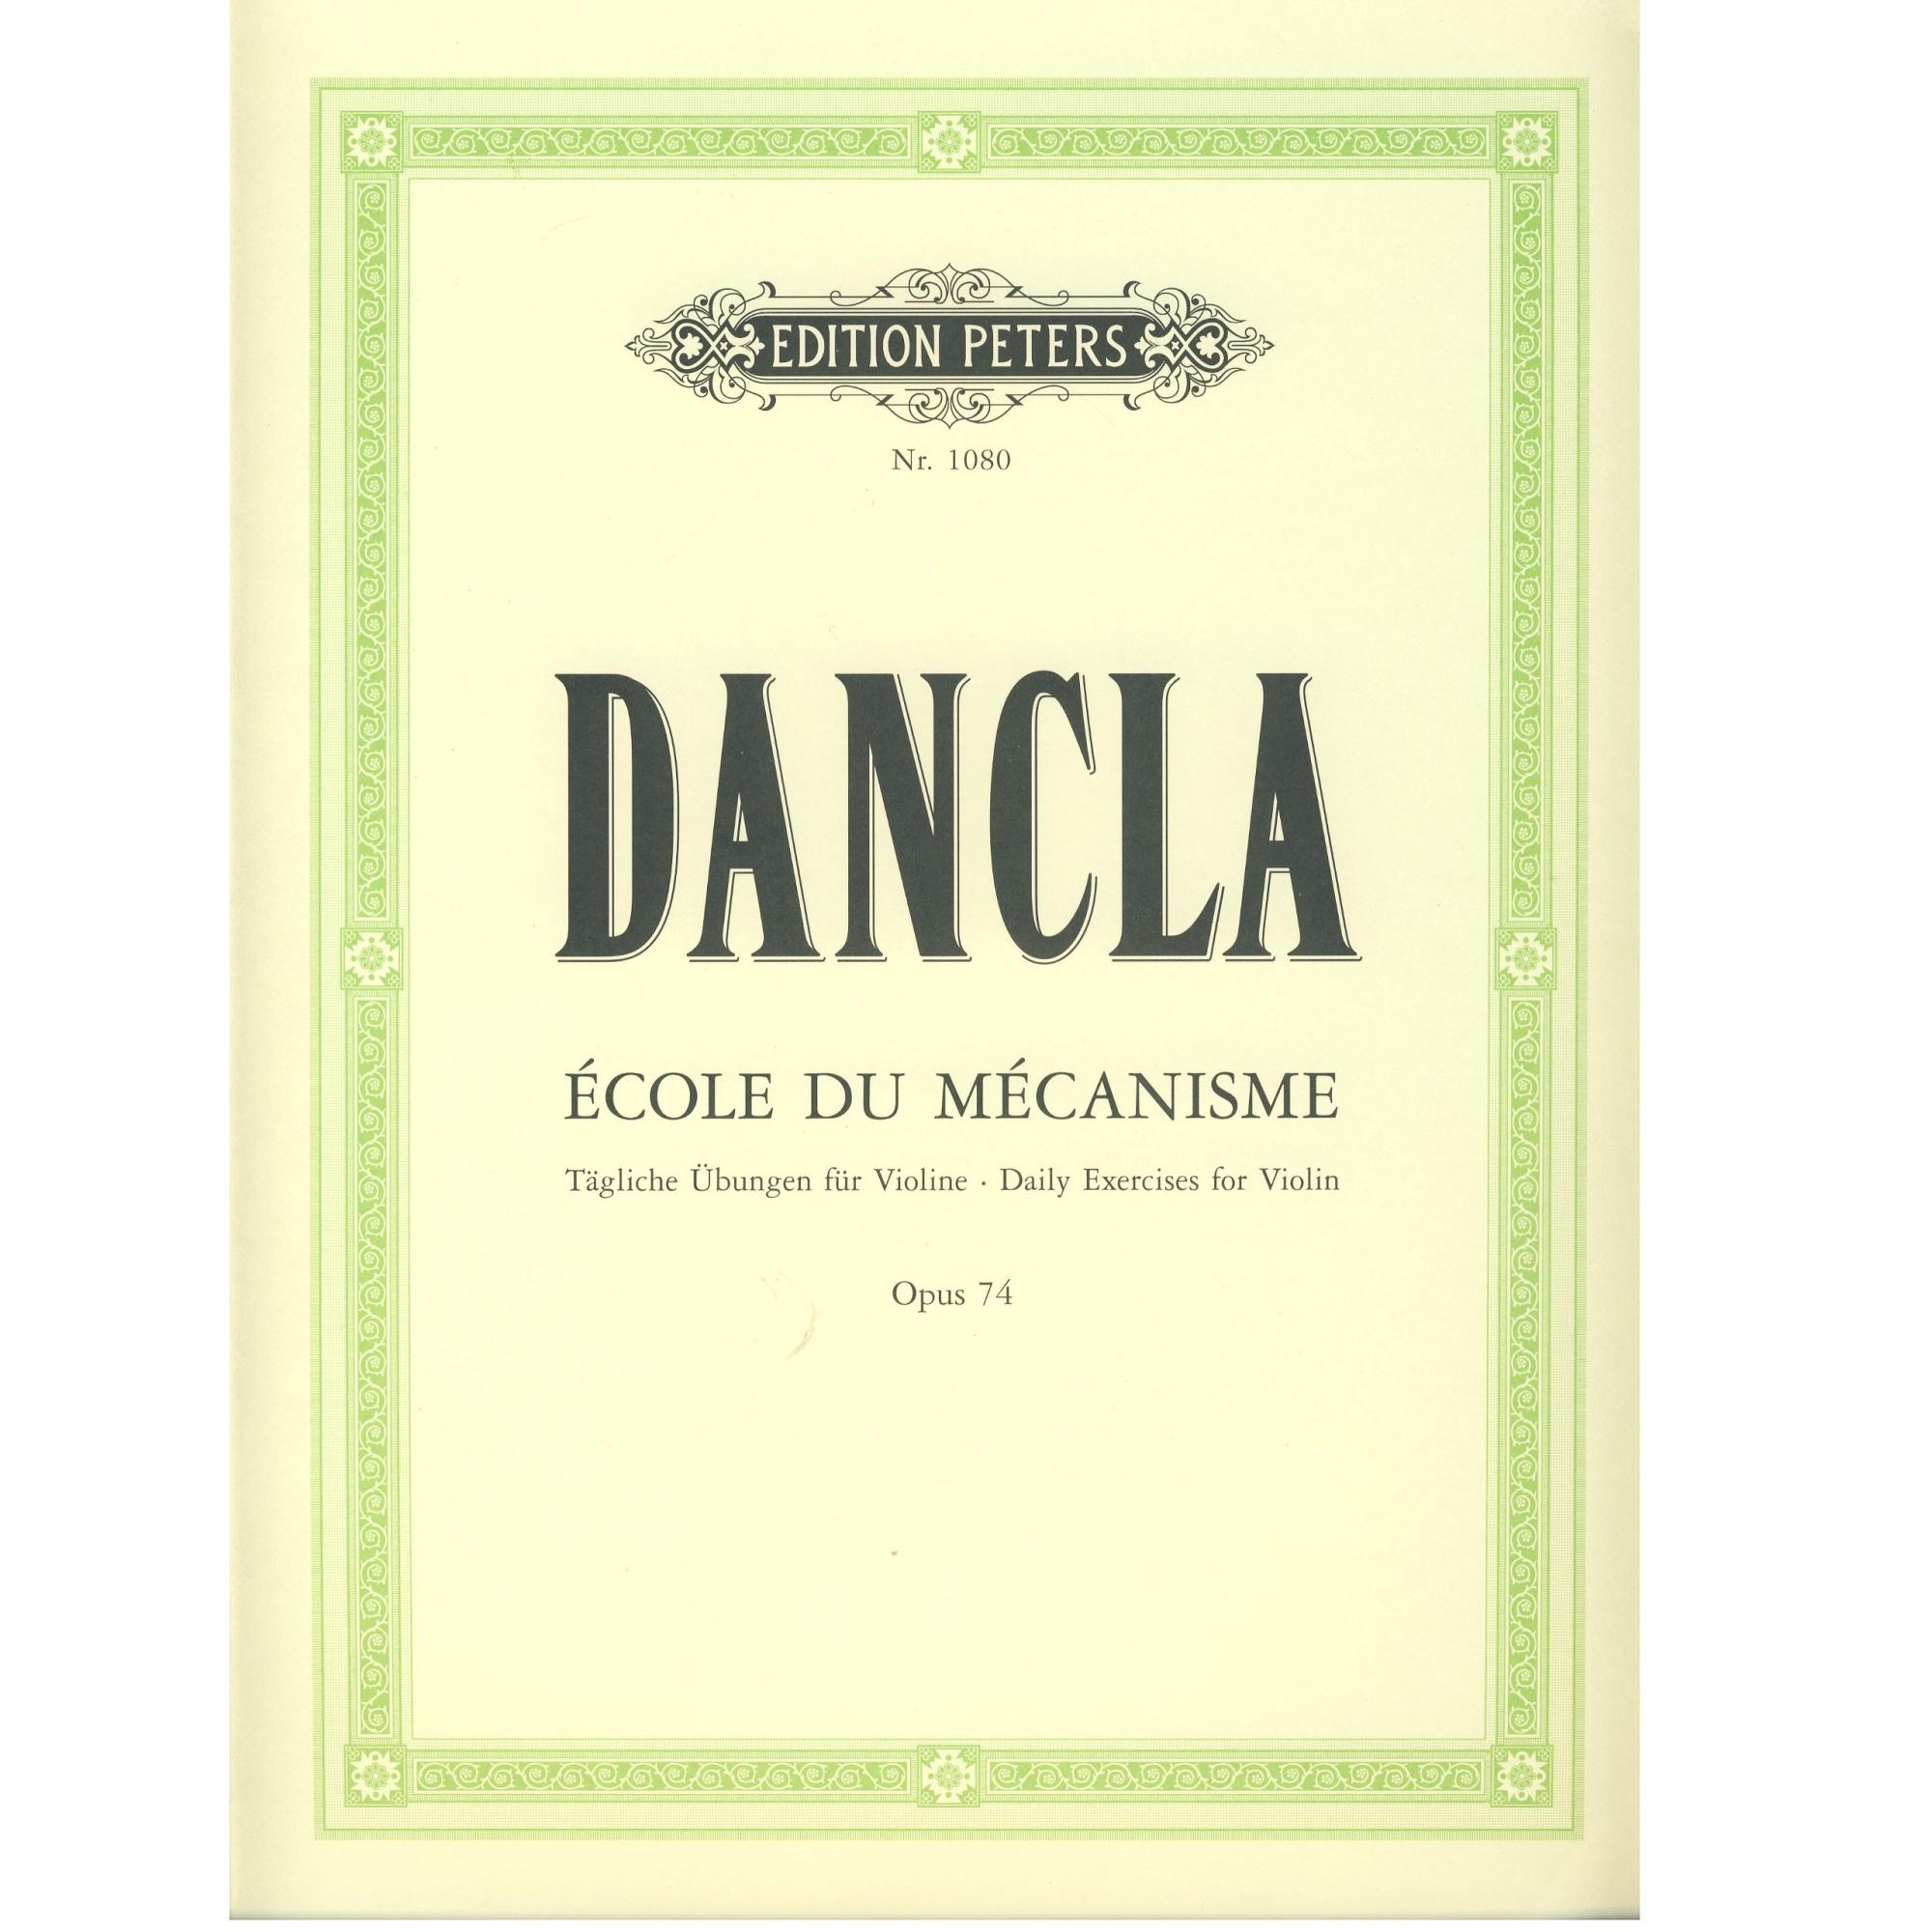 Dancla Ecole du mecanisme Daily exercises for Violin Opus 74 - Edition Peters